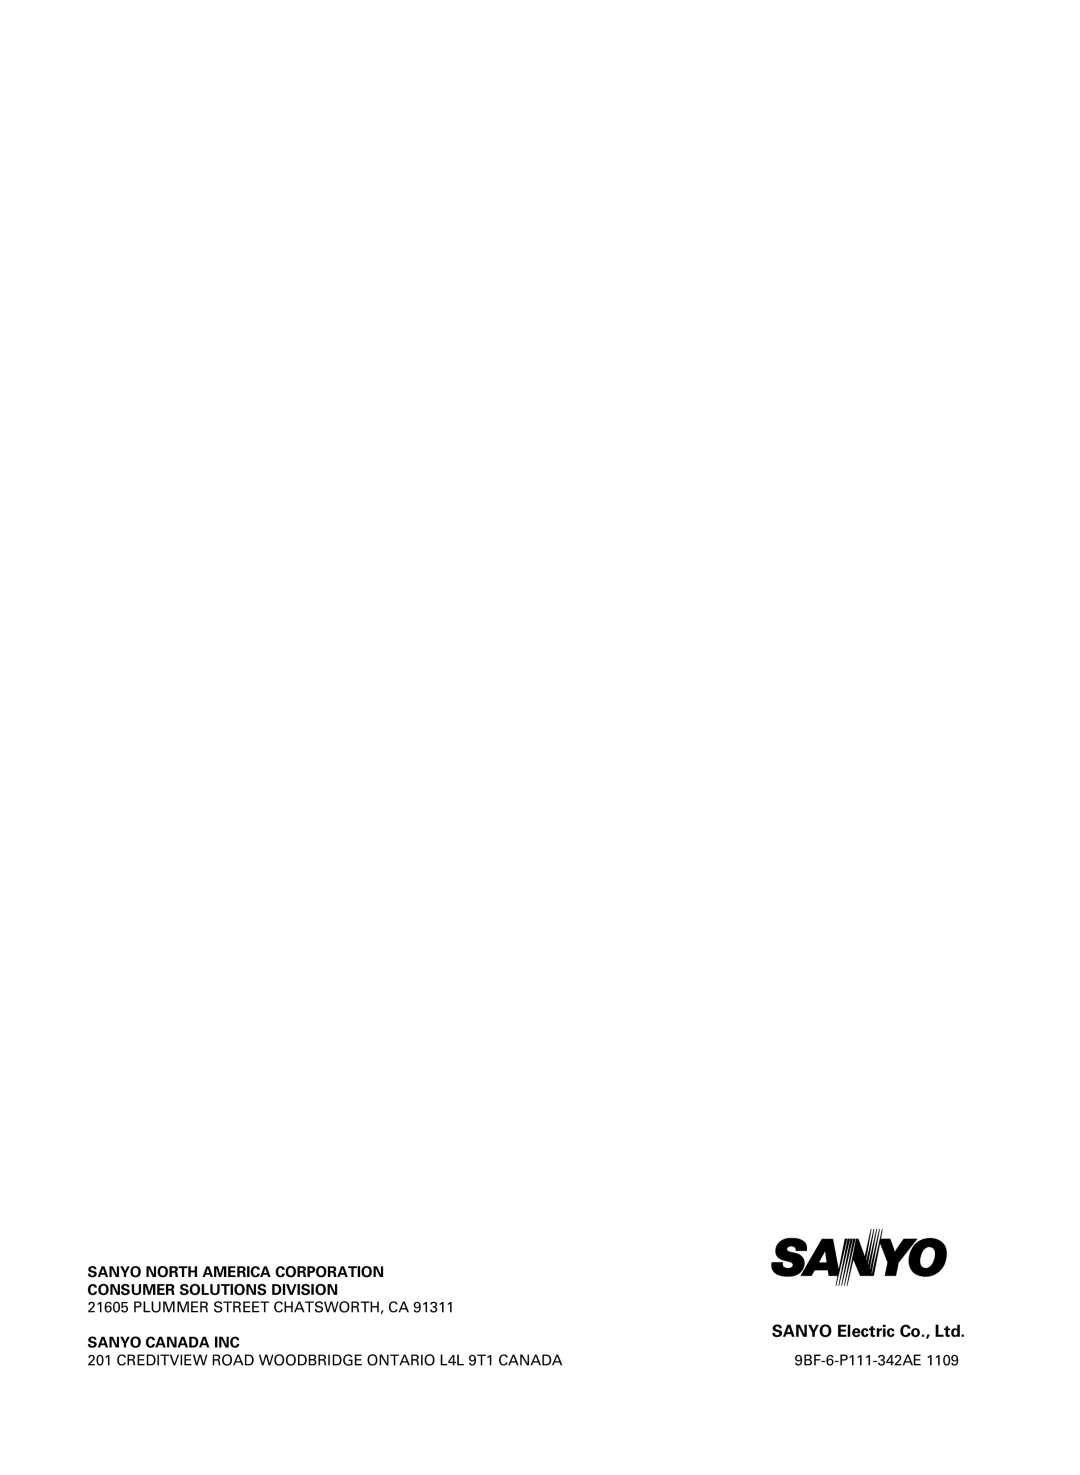 Sanyo ABC-VW24A Sanyo North America Corporation, Consumer Solutions Division, Plummer Street Chatsworth, Ca 